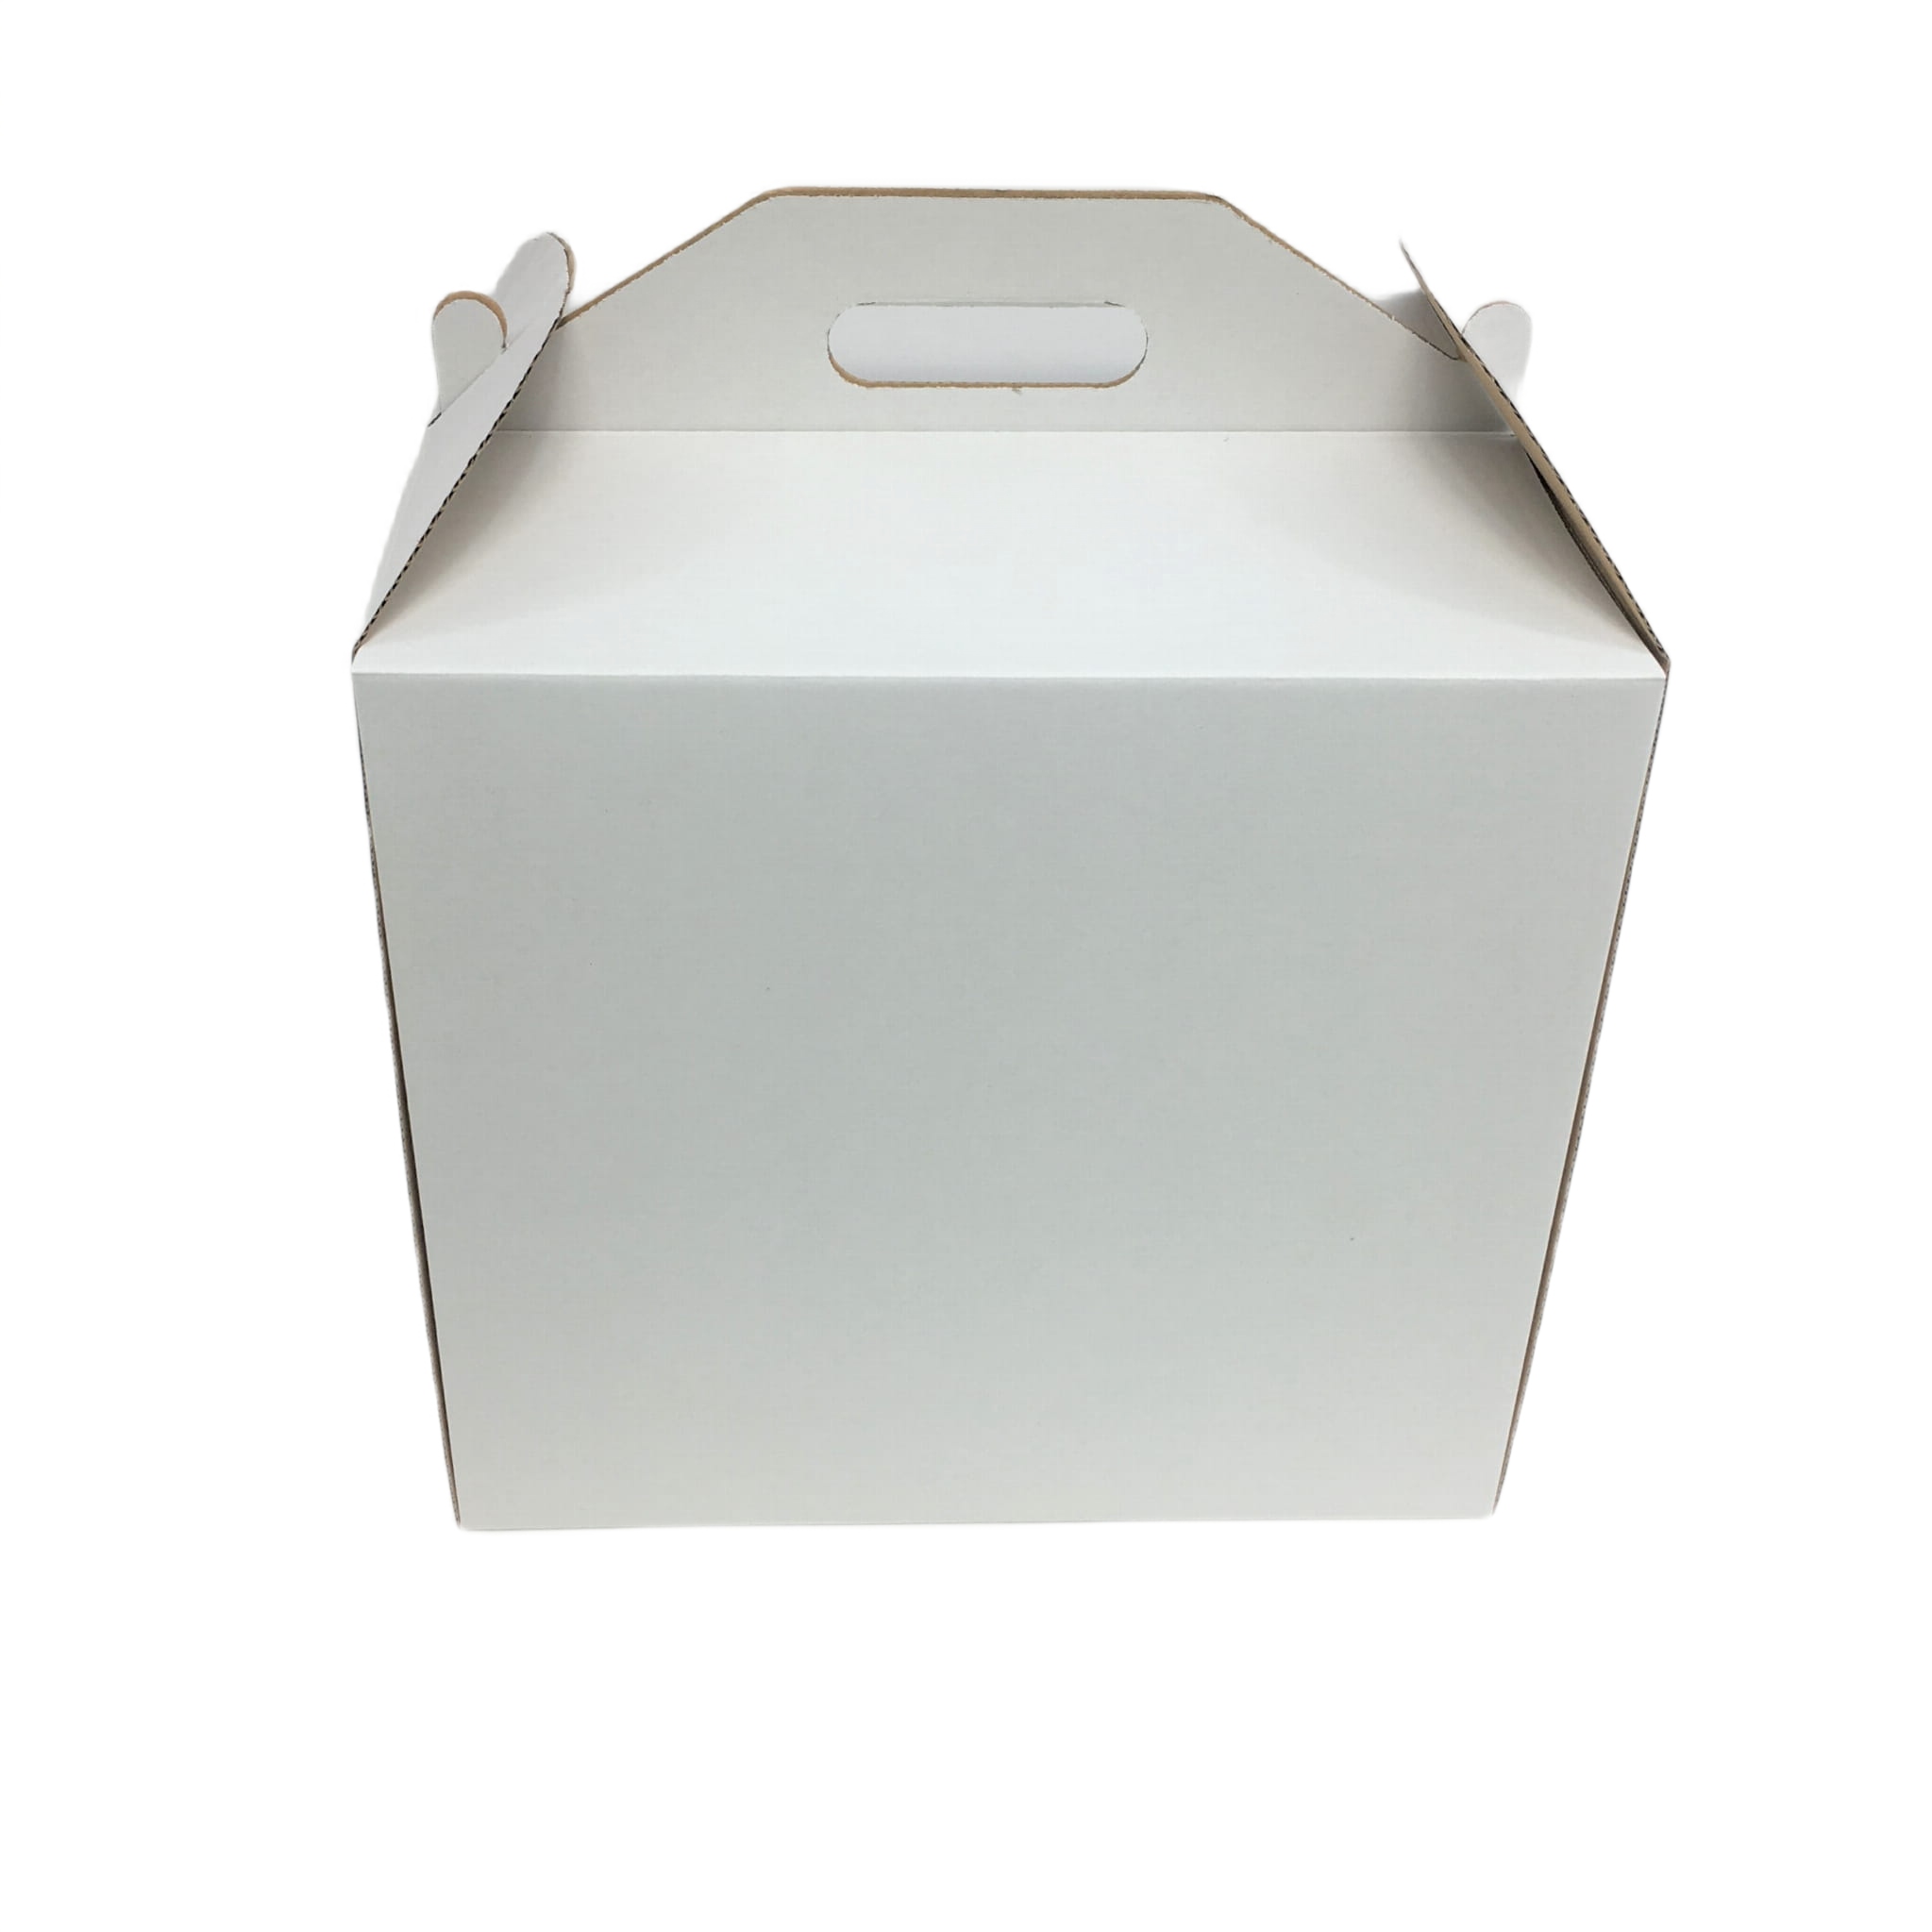 Opakowanie pudełko karton na tort 26x26x26 Białe Marka DesignPack